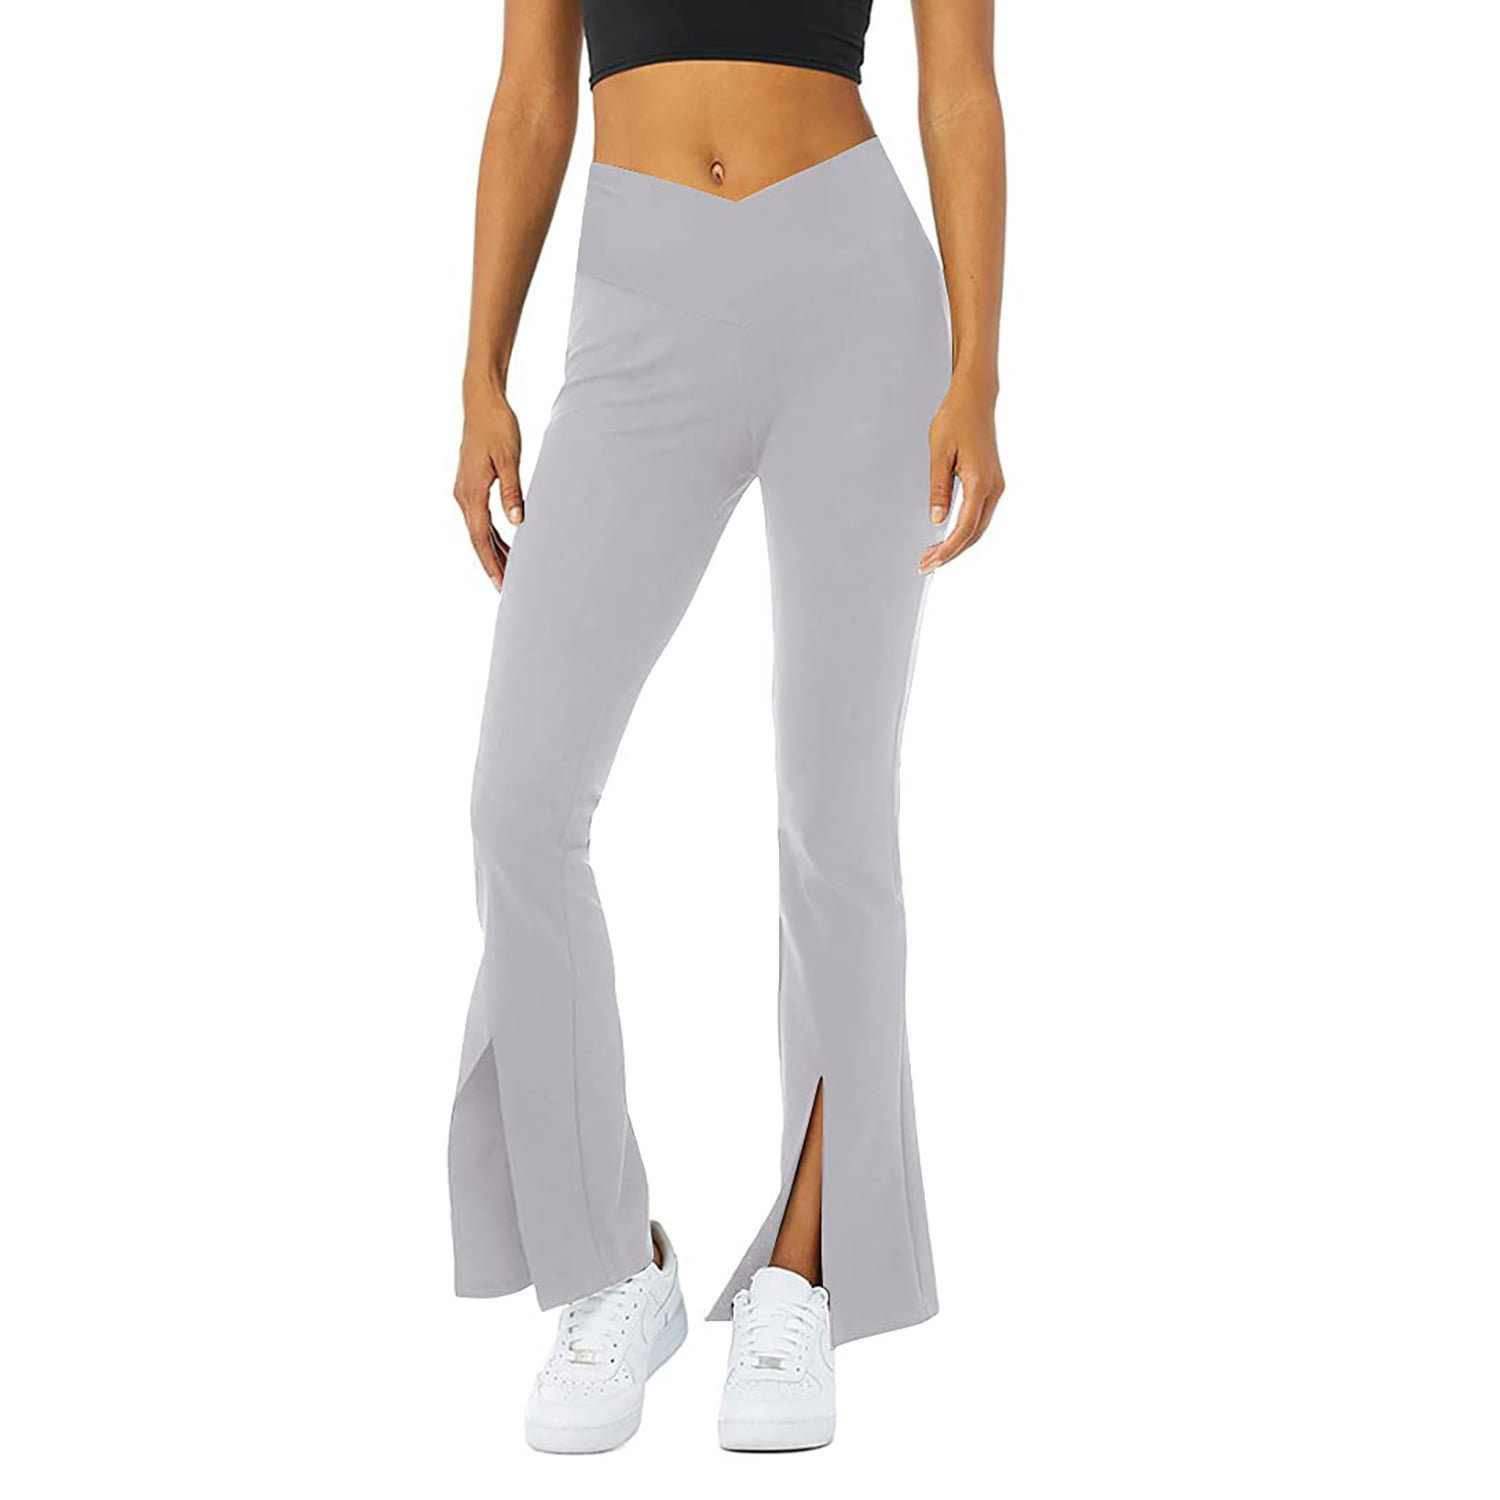 Delou Women's Crossover High Waist Boot Cut Yoga Pants Front Slit ...